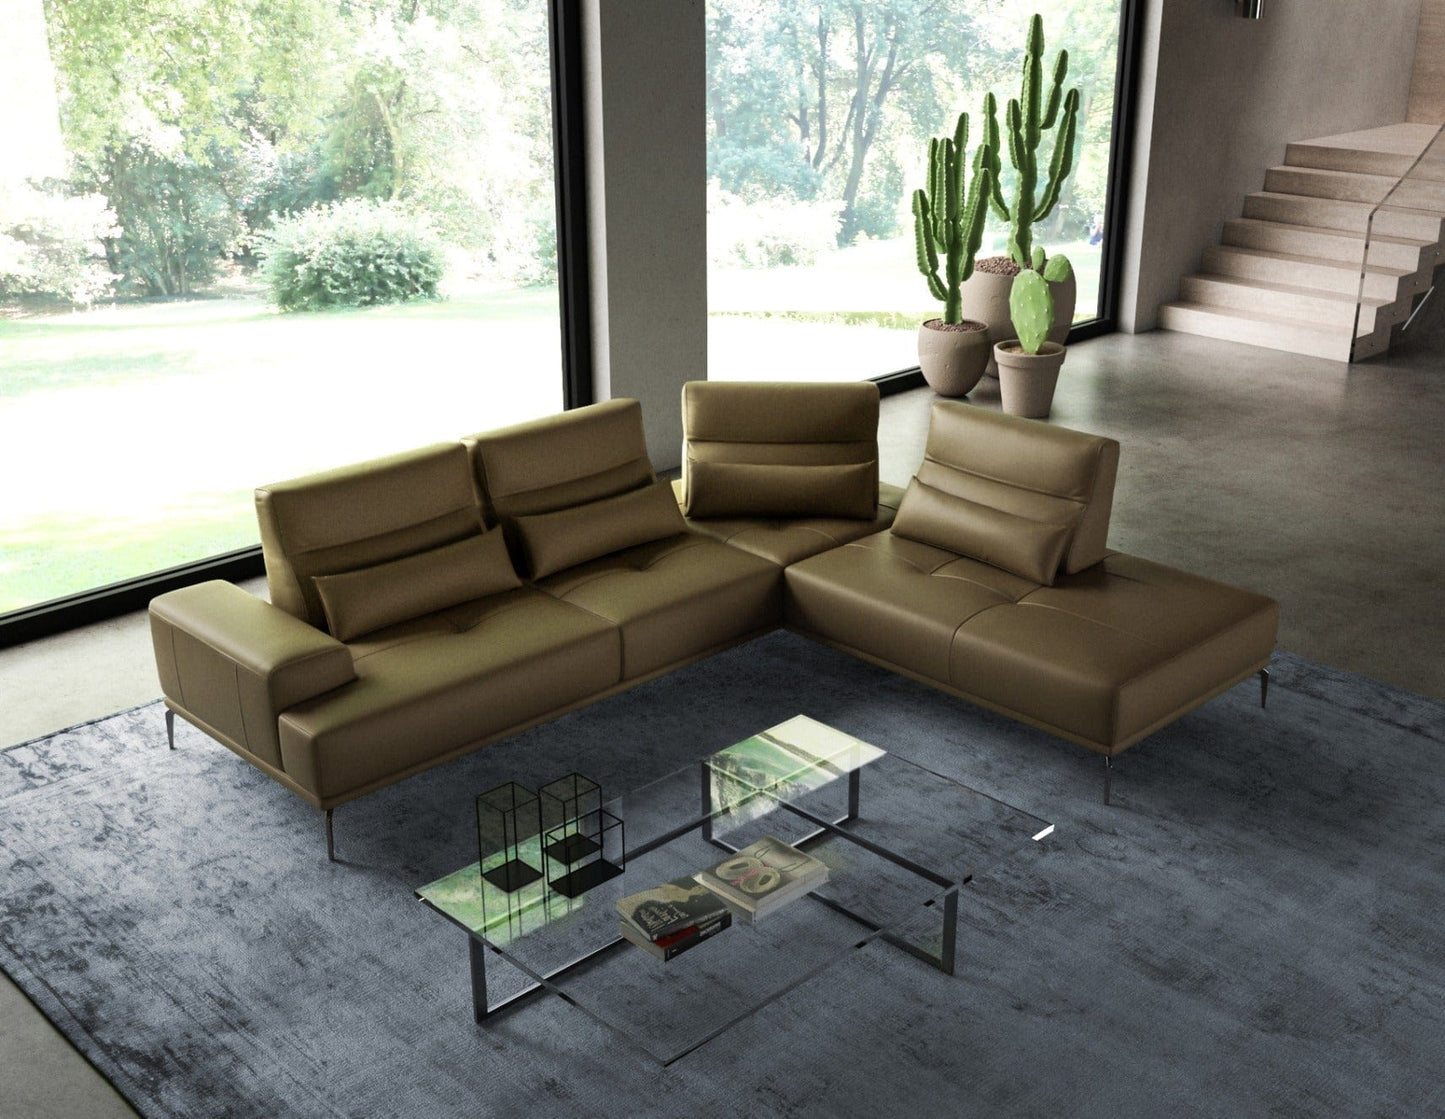 Coronelli Collezioni Sunset - Contemporary Italian Kiwi Leather Right Facing Sectional Sofa